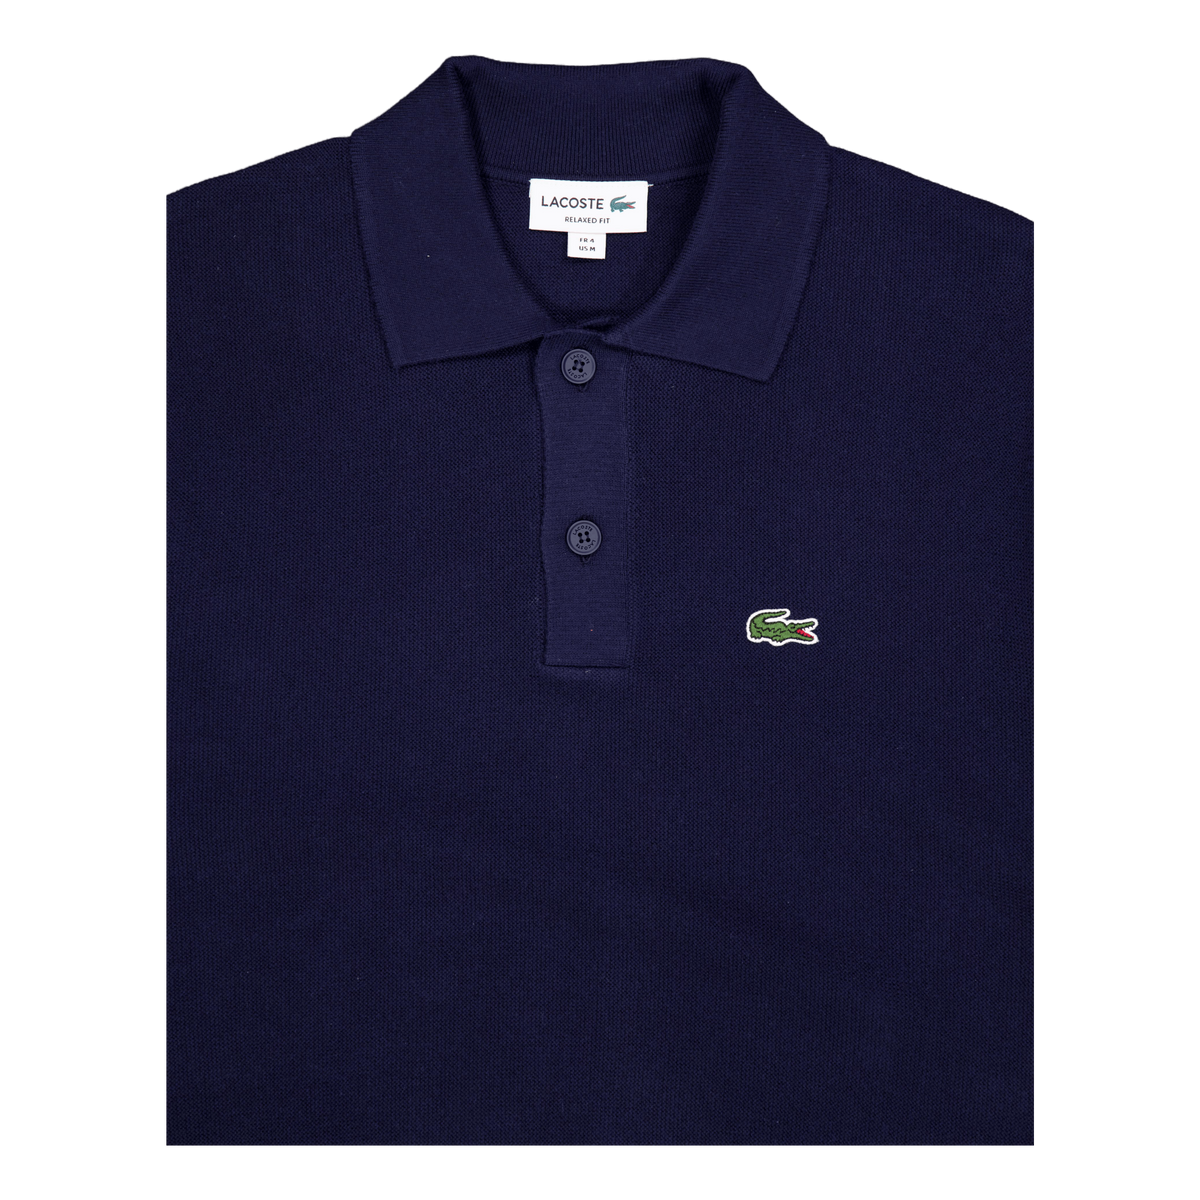 Organic Cotton Polo Shirt 423